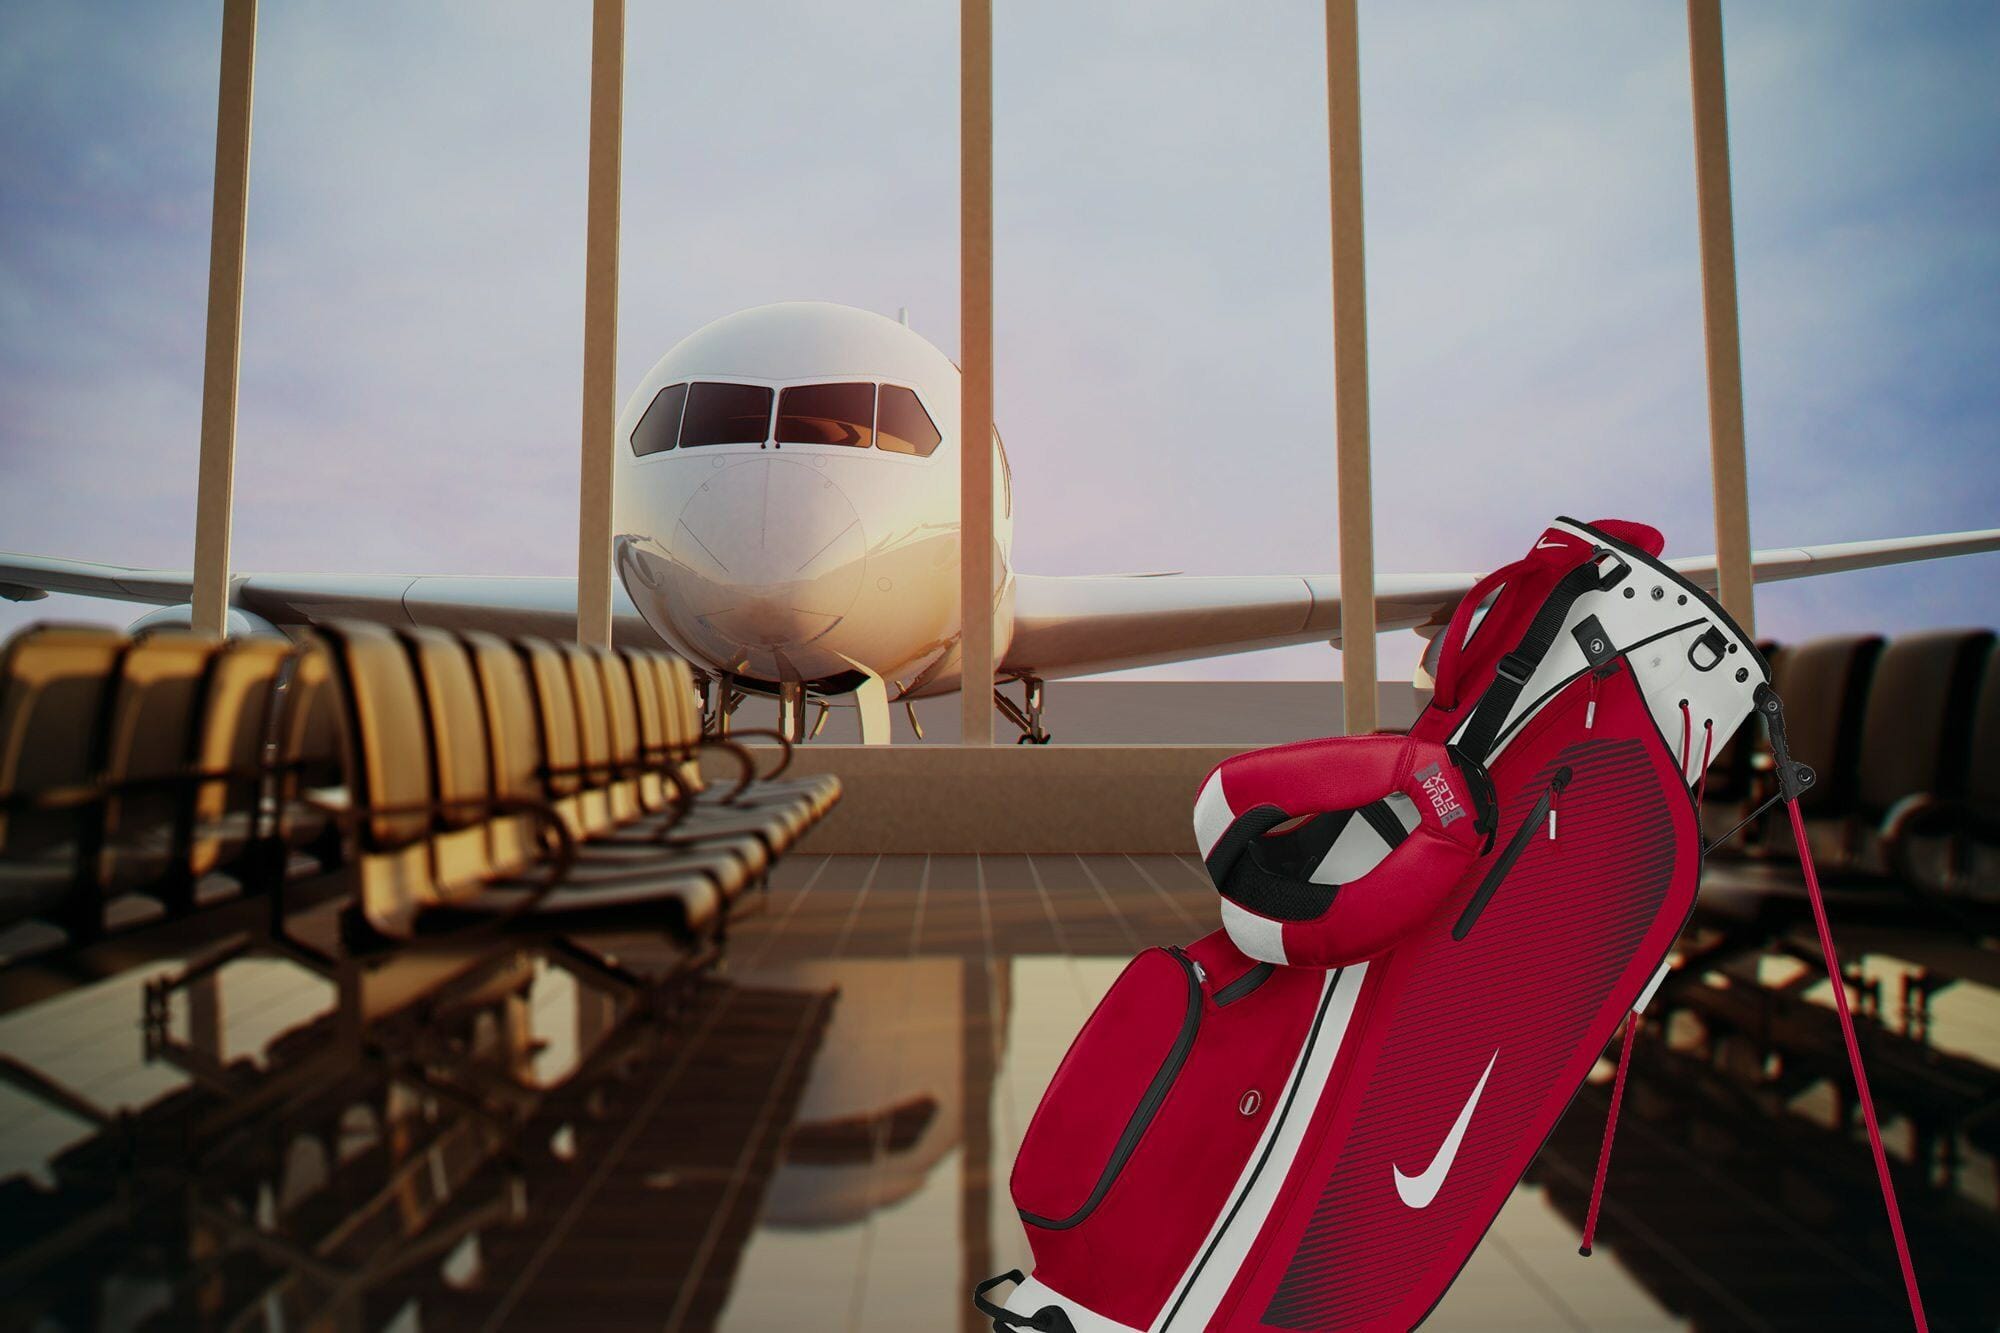 best golf travel bags